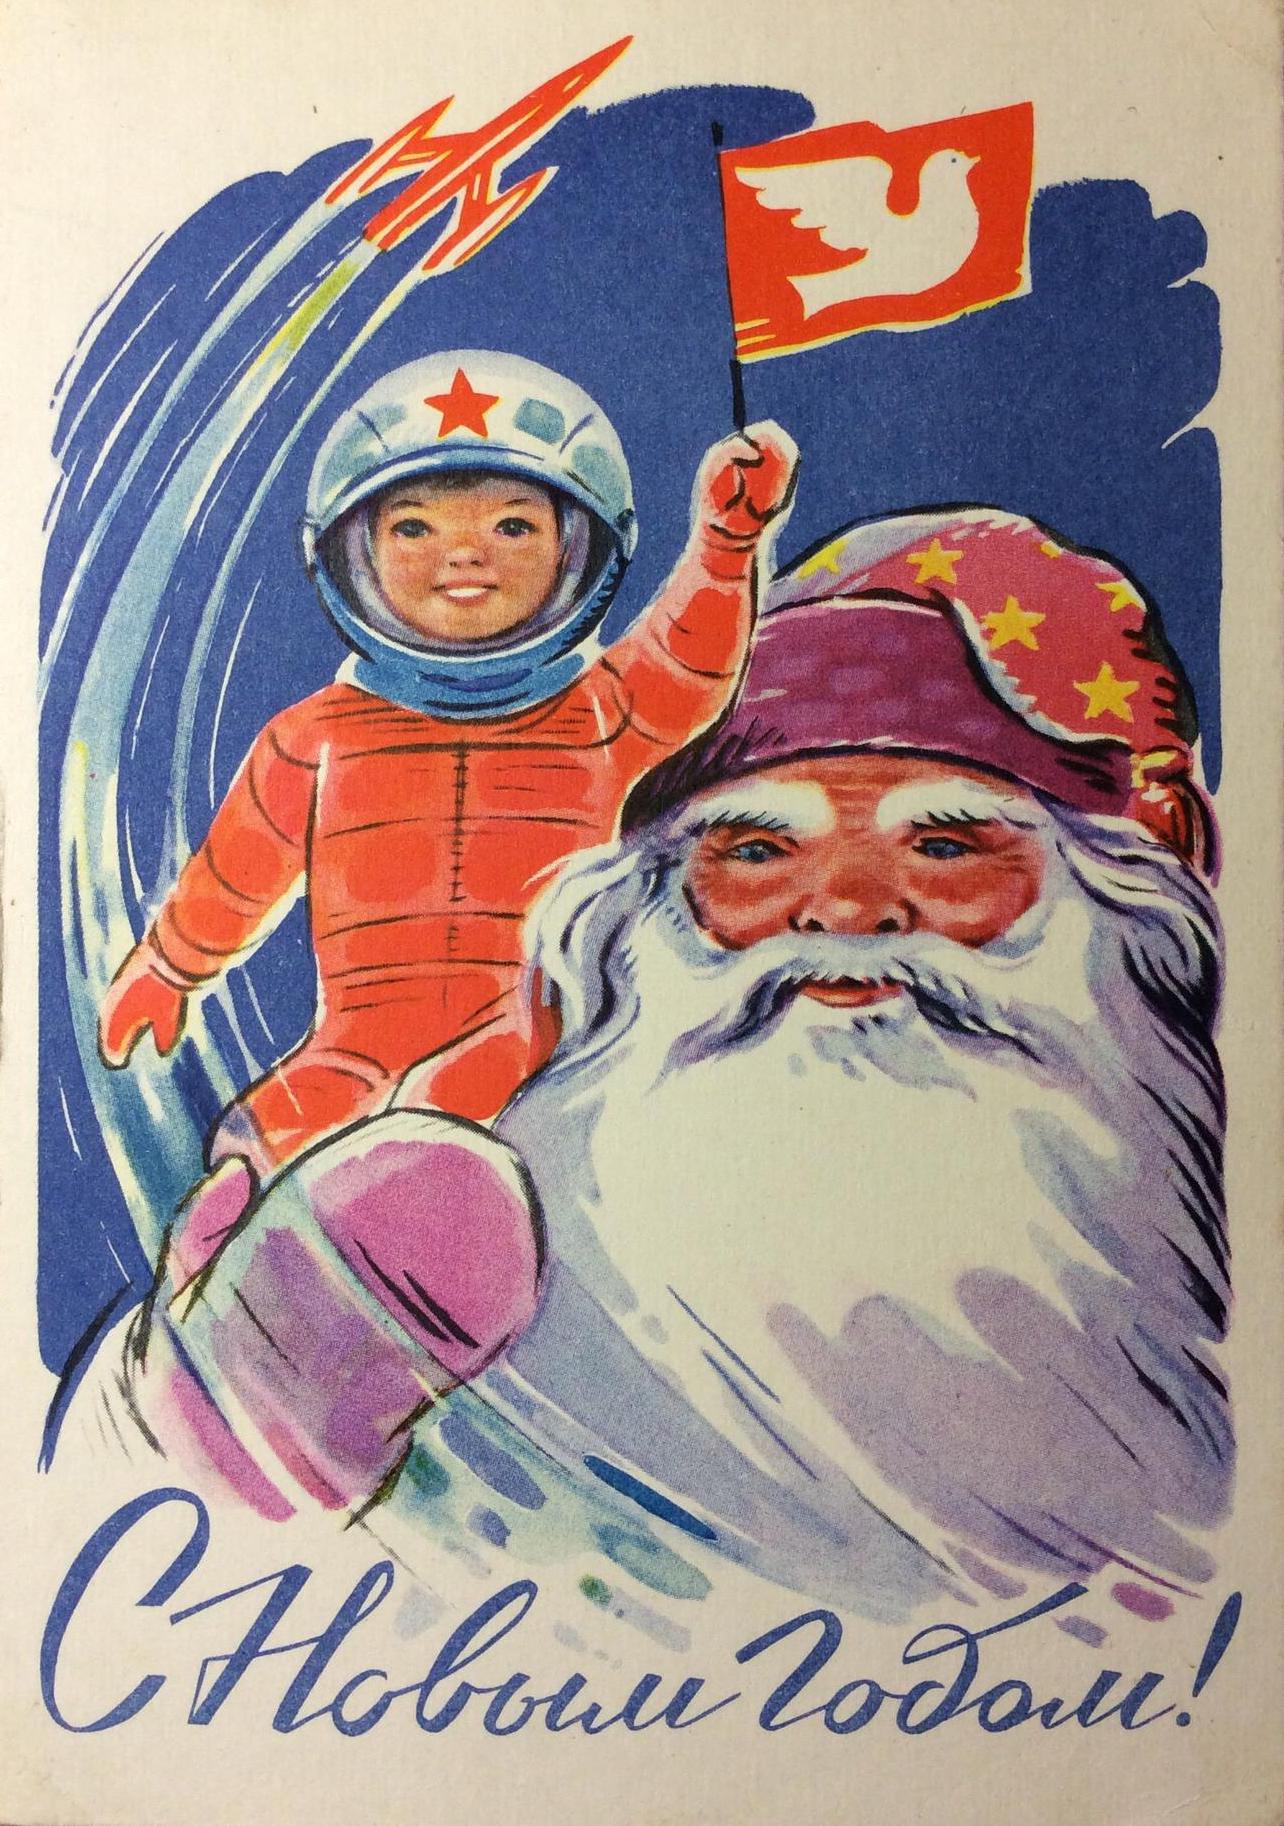 Ded Moroz for Soviet Santa article